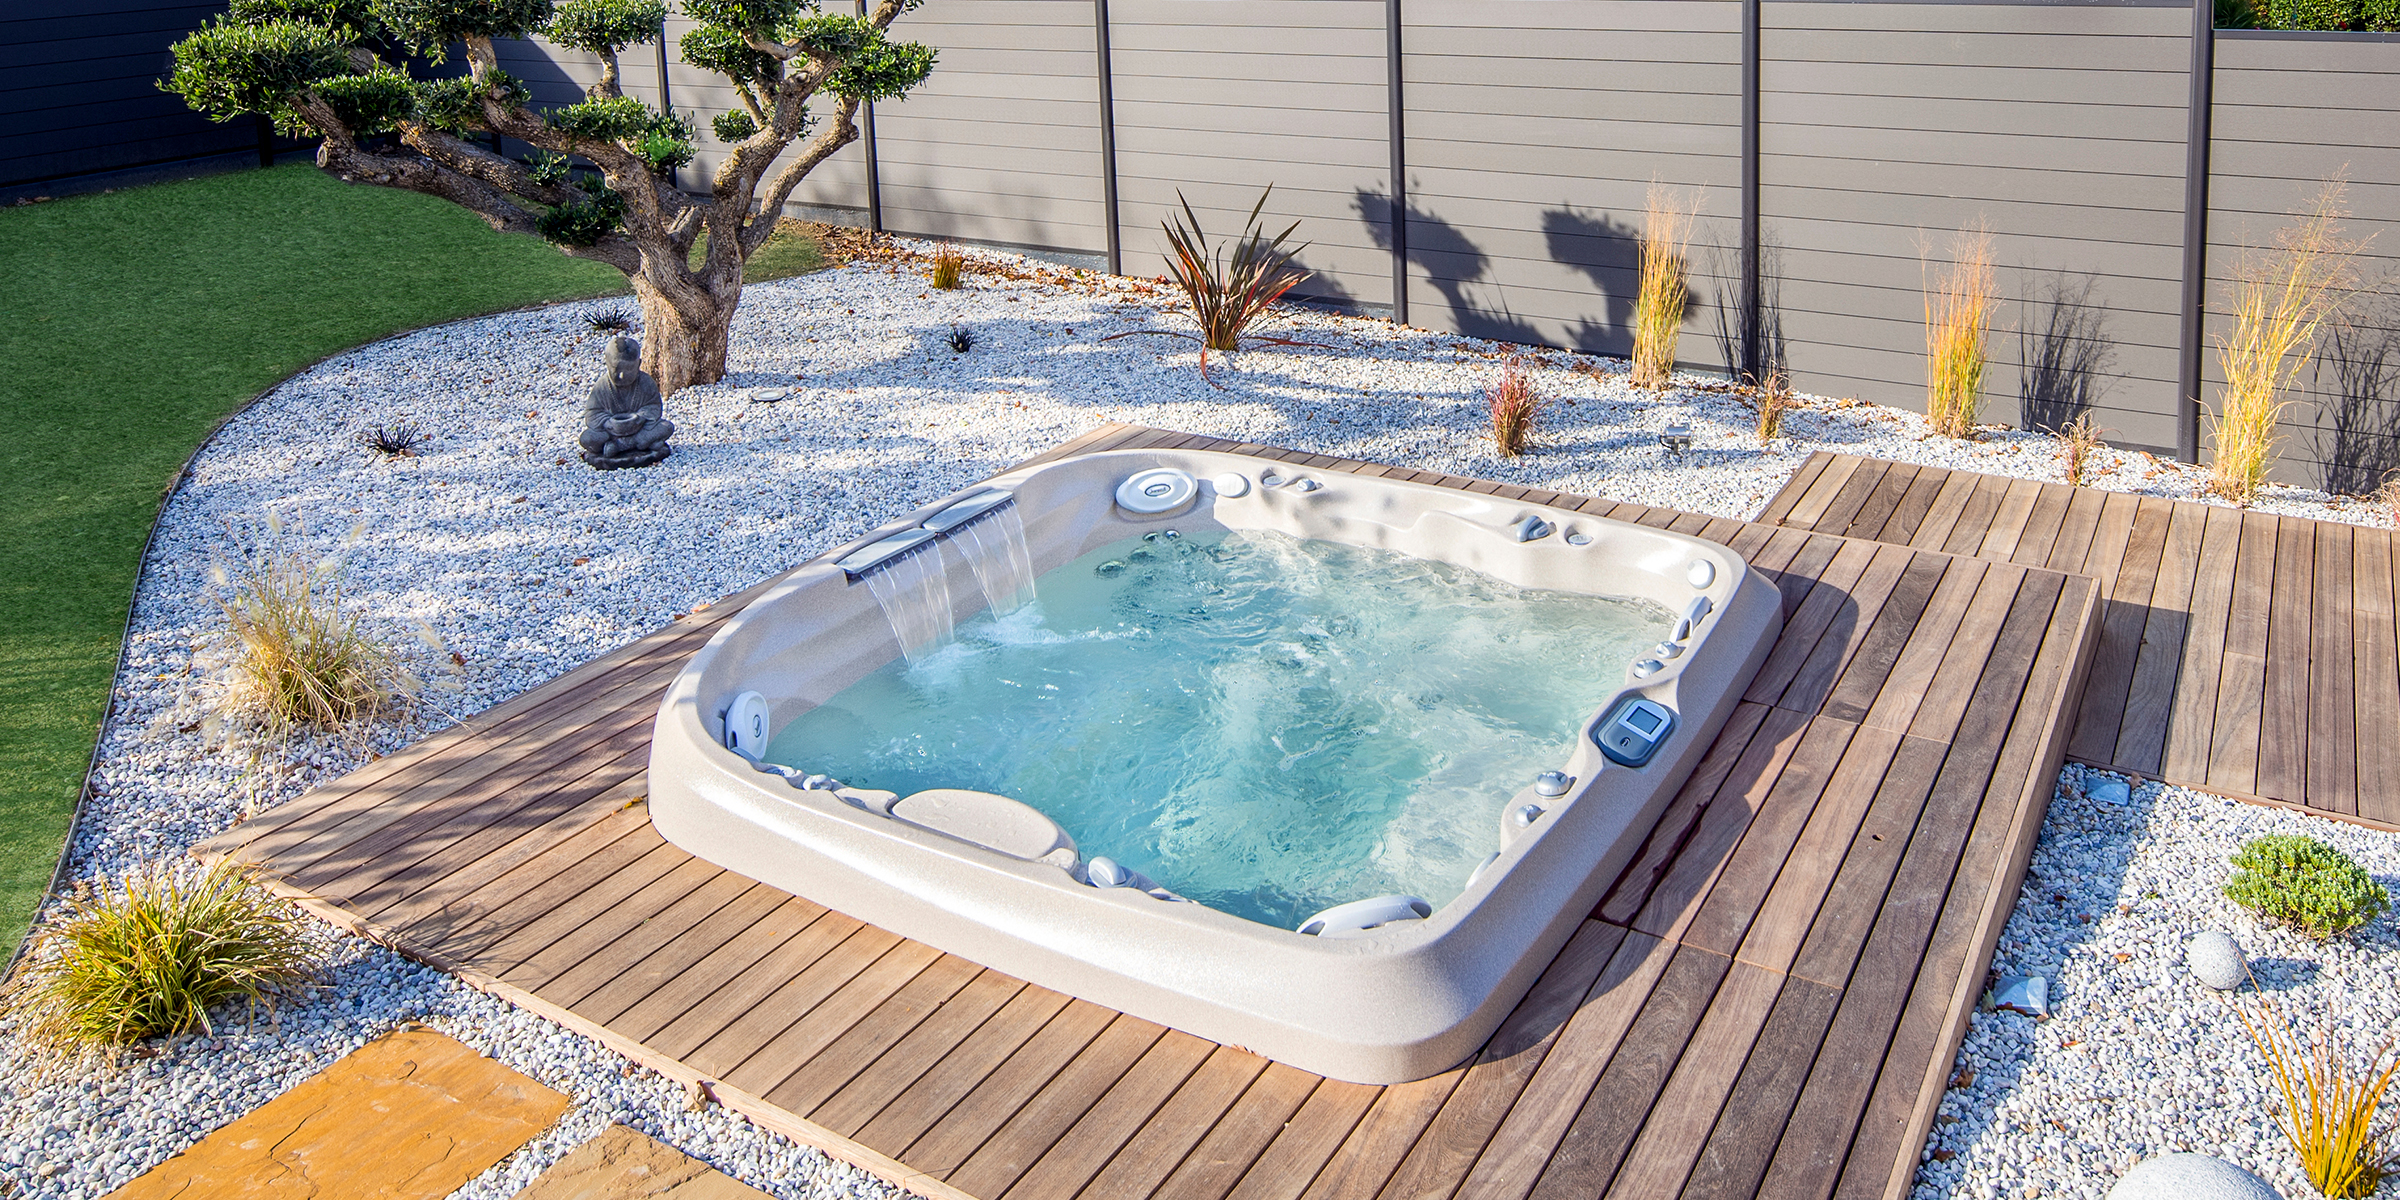 A hot tub | Source: Shutterstock